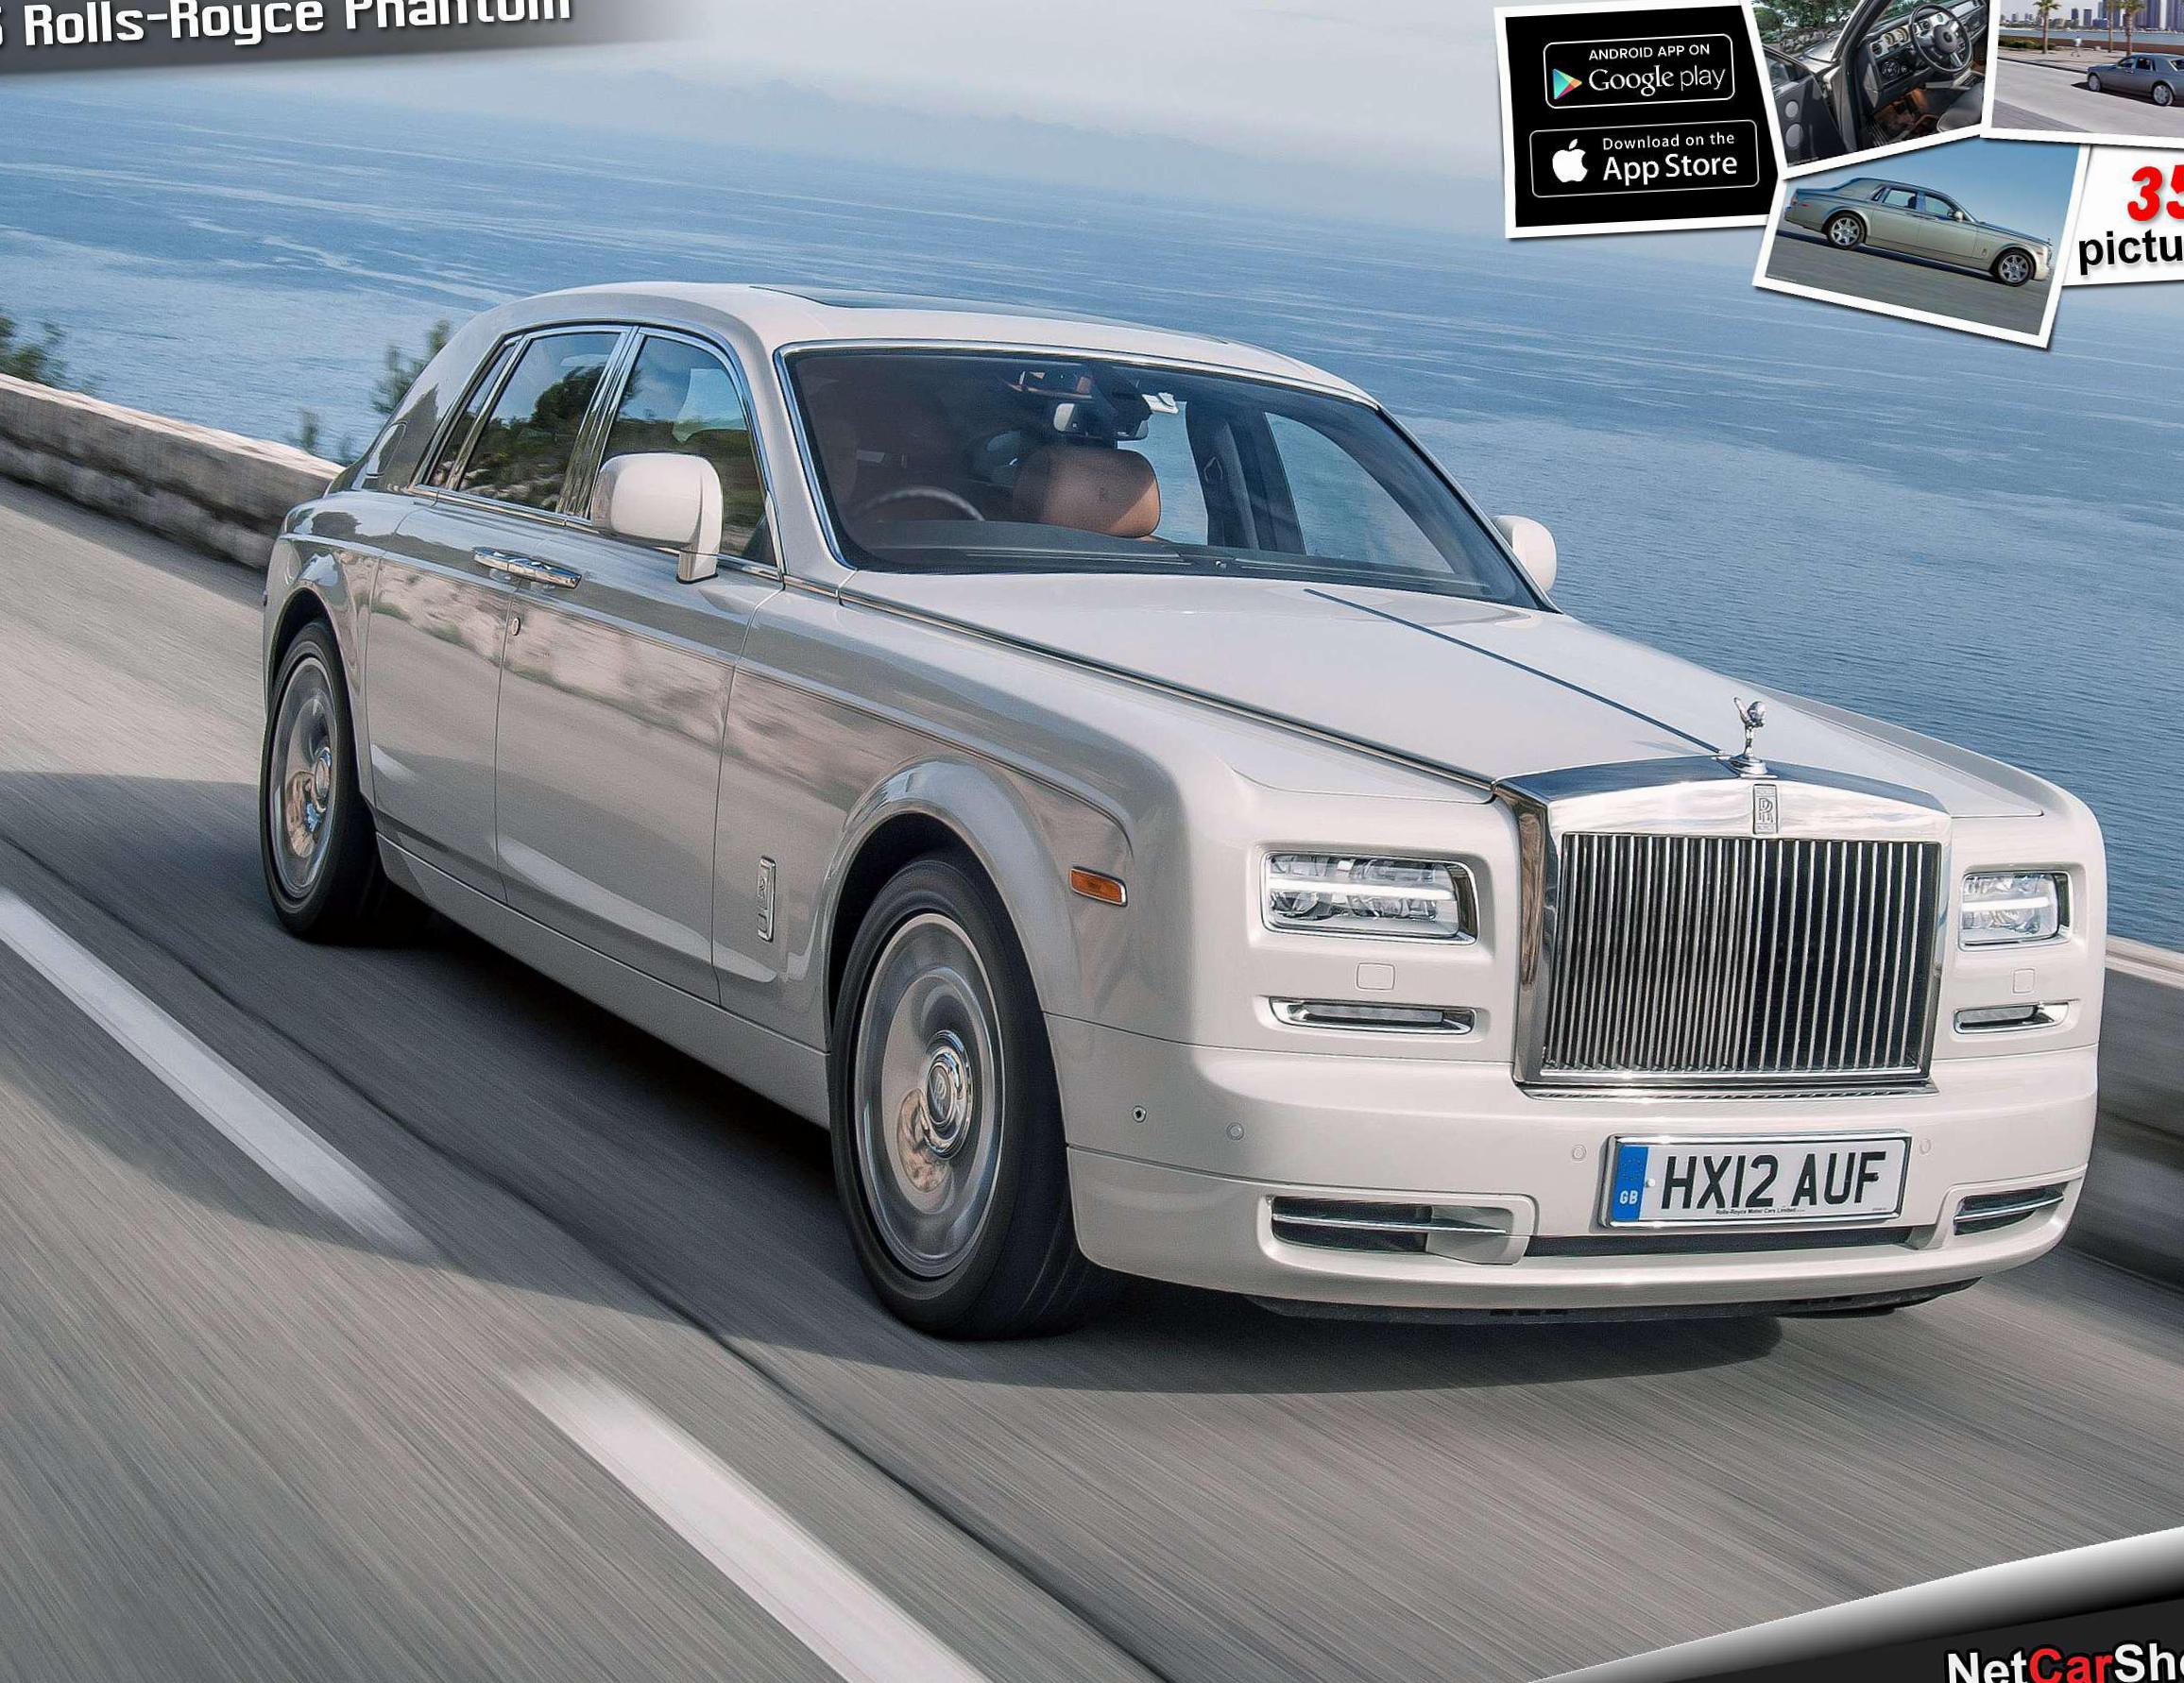 Phantom Rolls-Royce for sale 2012